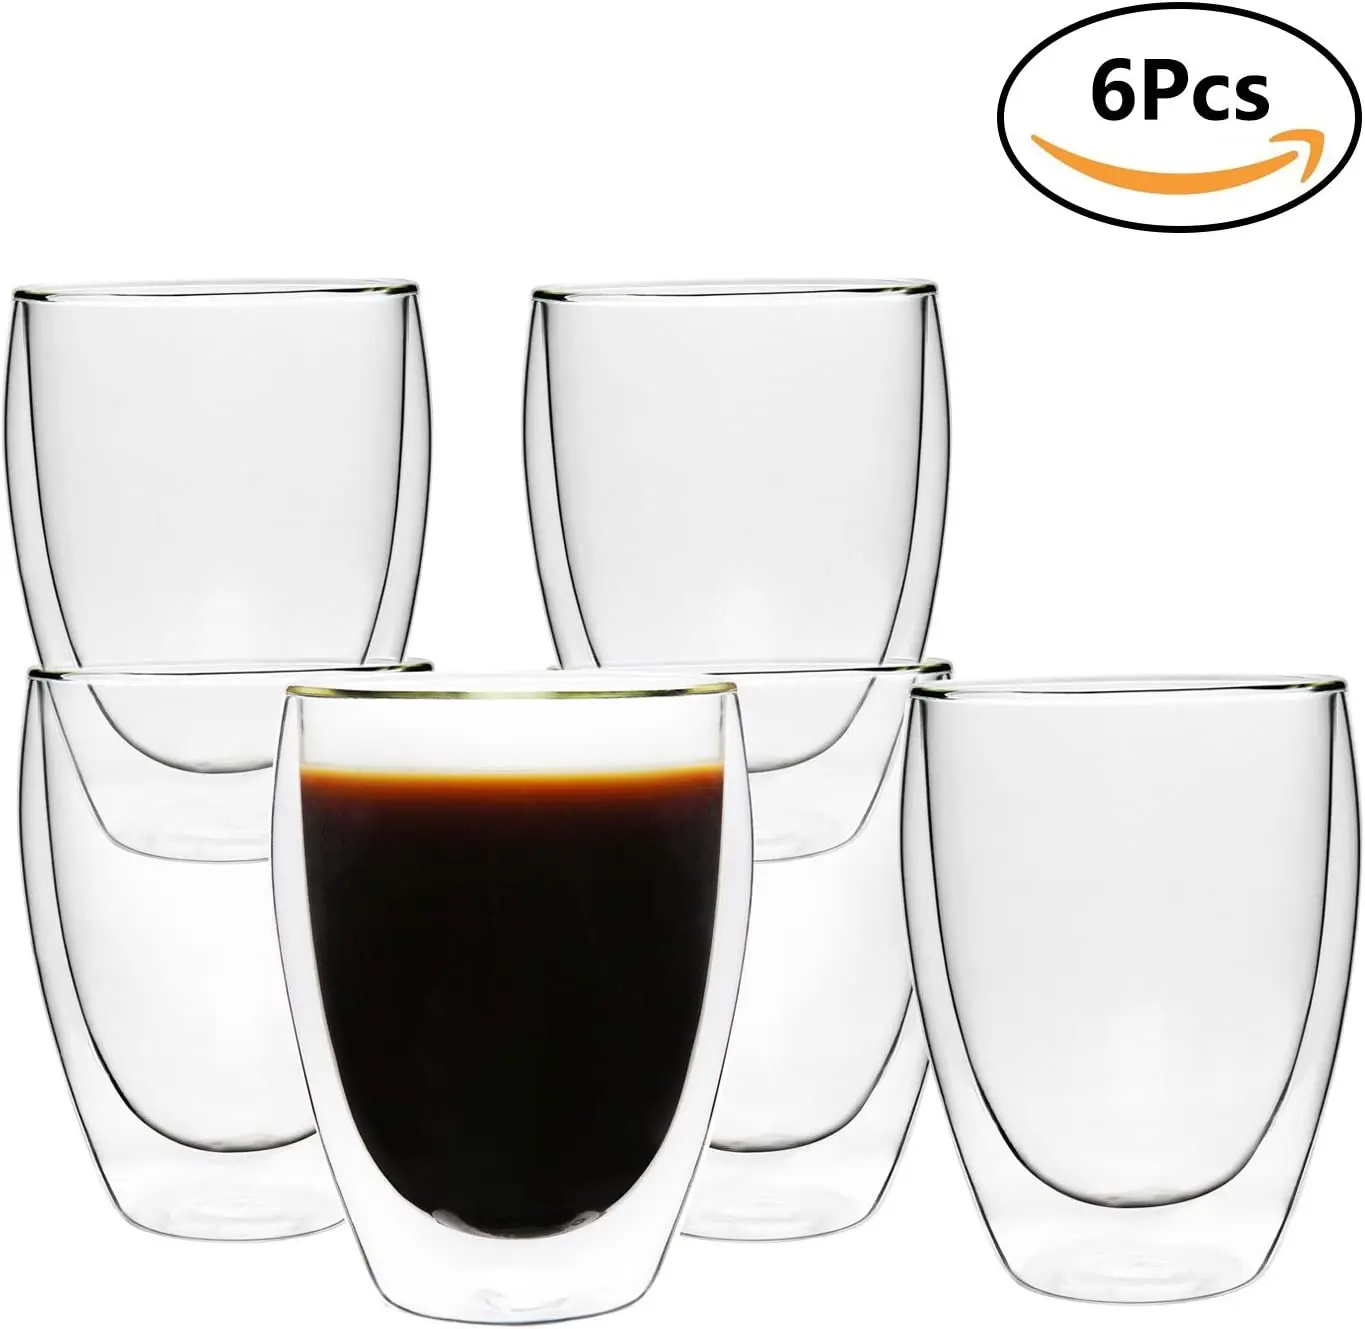 1pc, Double Wall Glass Cups, Insulated Espresso Mugs Glasses For Tea,  Espresso Coffee, Latte, Cappuccino, Cafe, , Milk, Heat Resistant Glasses,  Summer Winter Drinkware